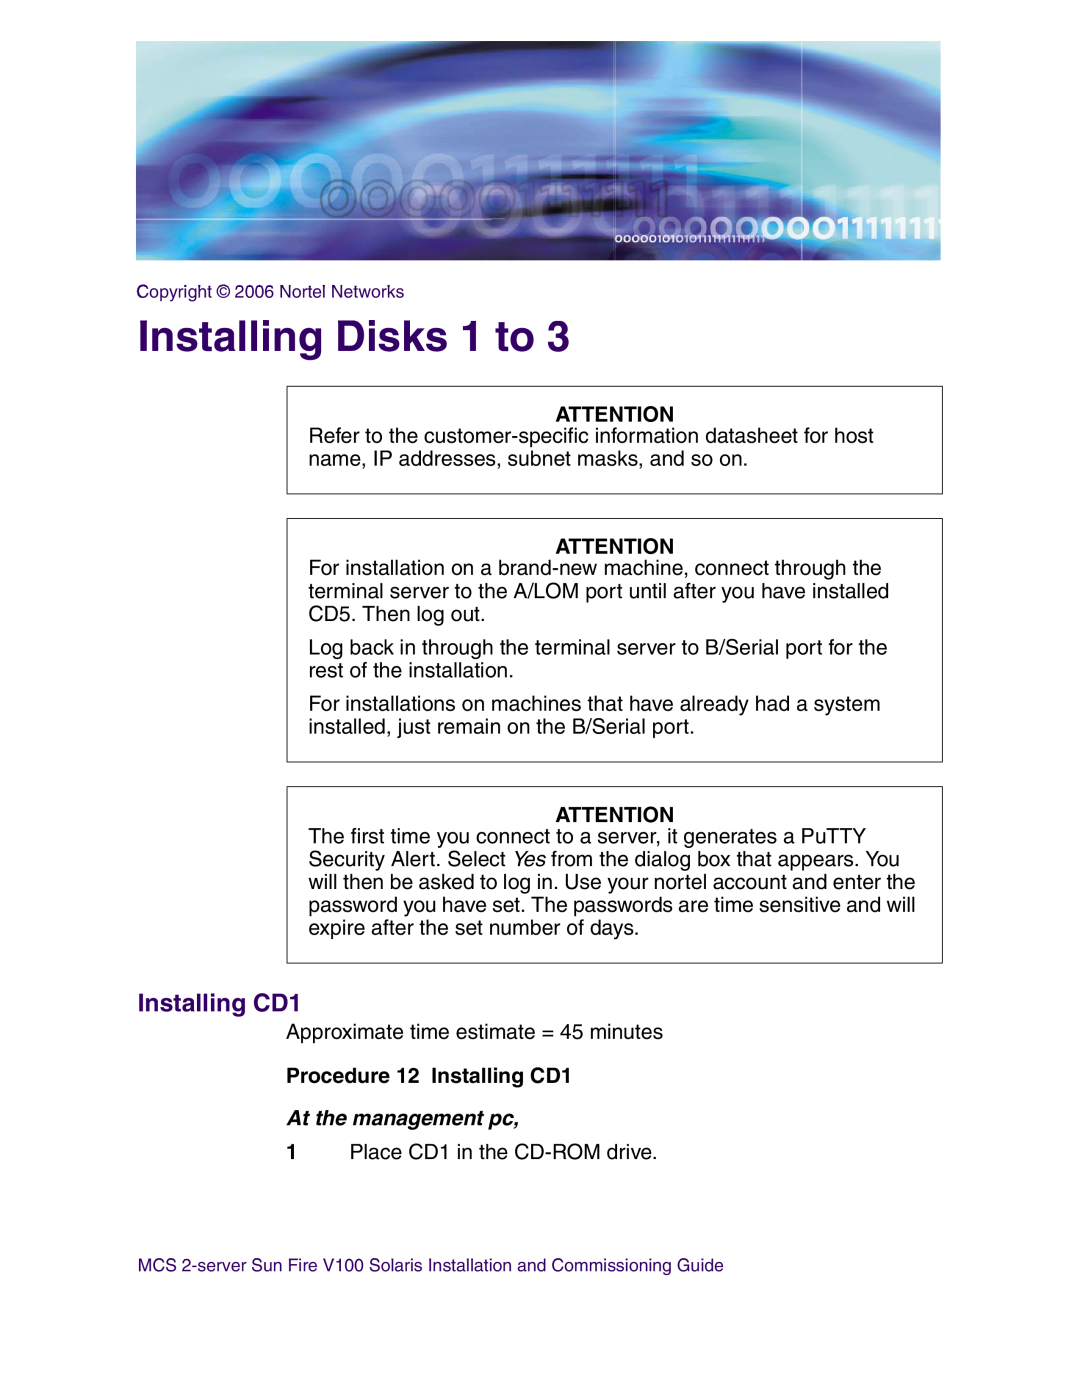 Nortel Networks V100 manual Installing Disks 1 to, Procedure 12 Installing CD1, At the management pc 